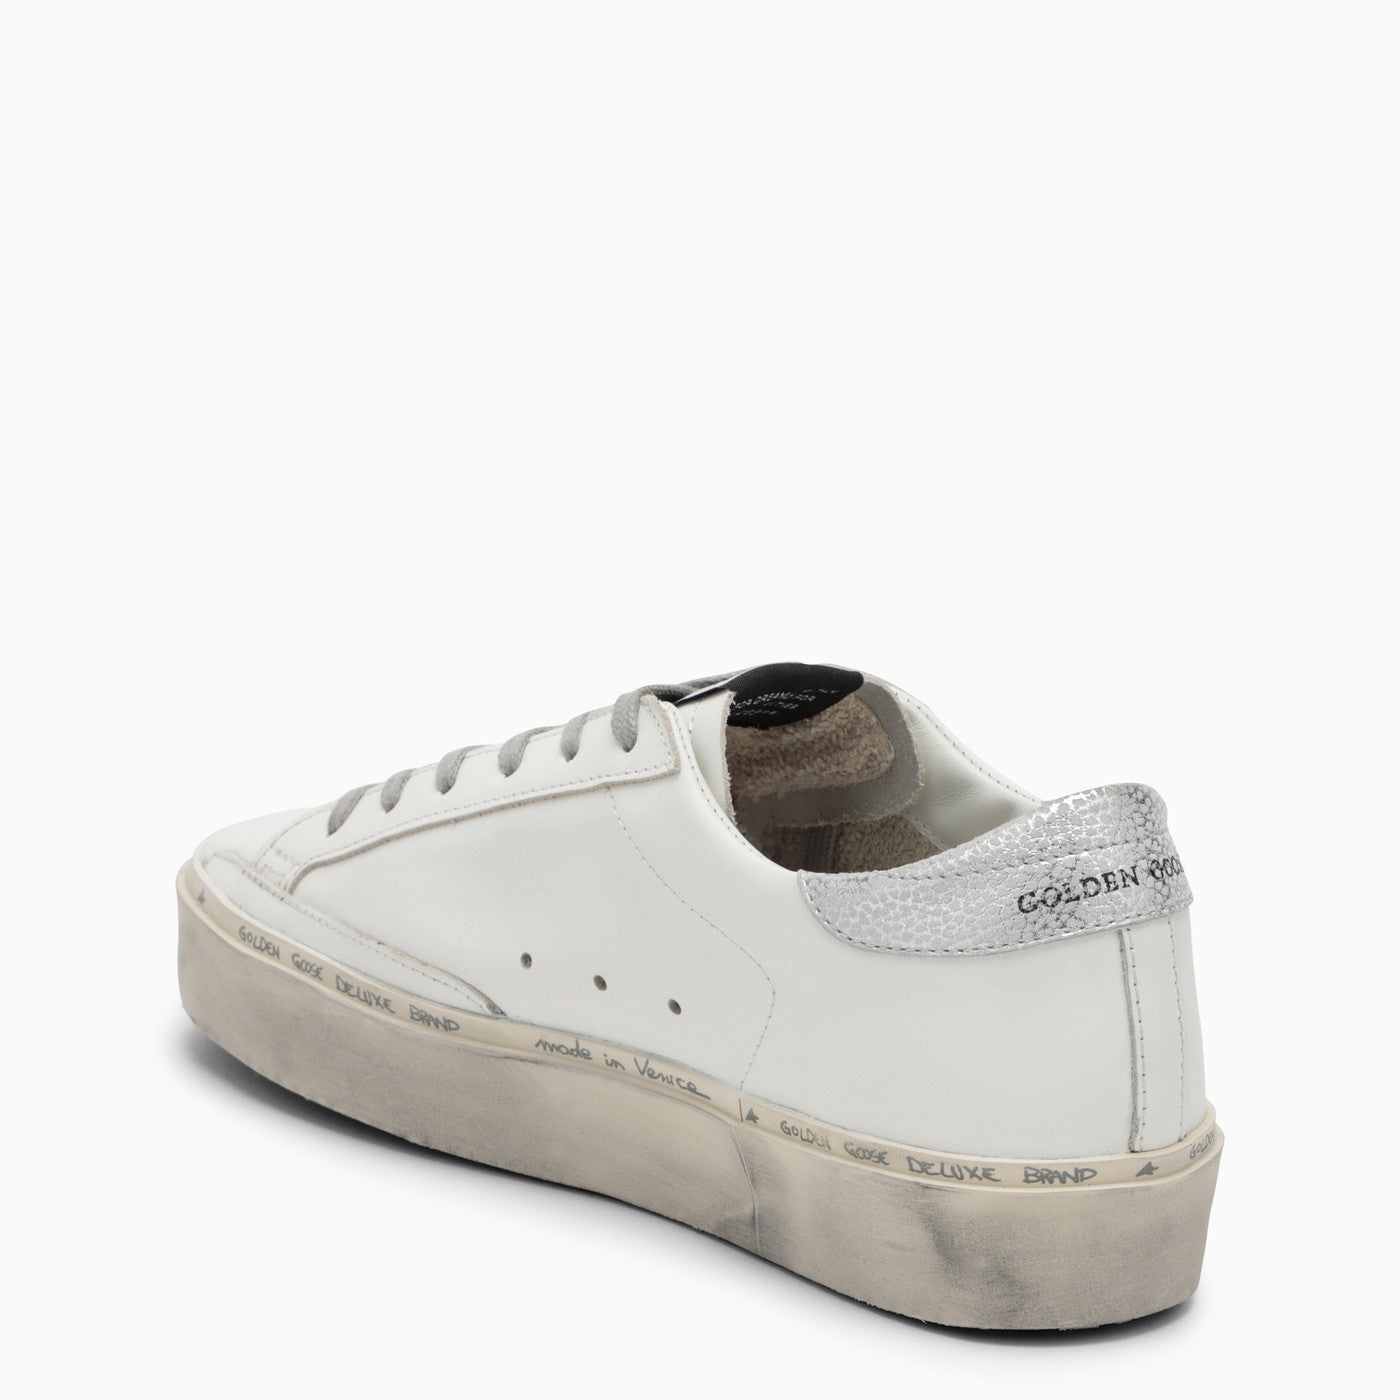 Golden Goose Deluxe Brand White/Silver Hi Star Sneakers - 4